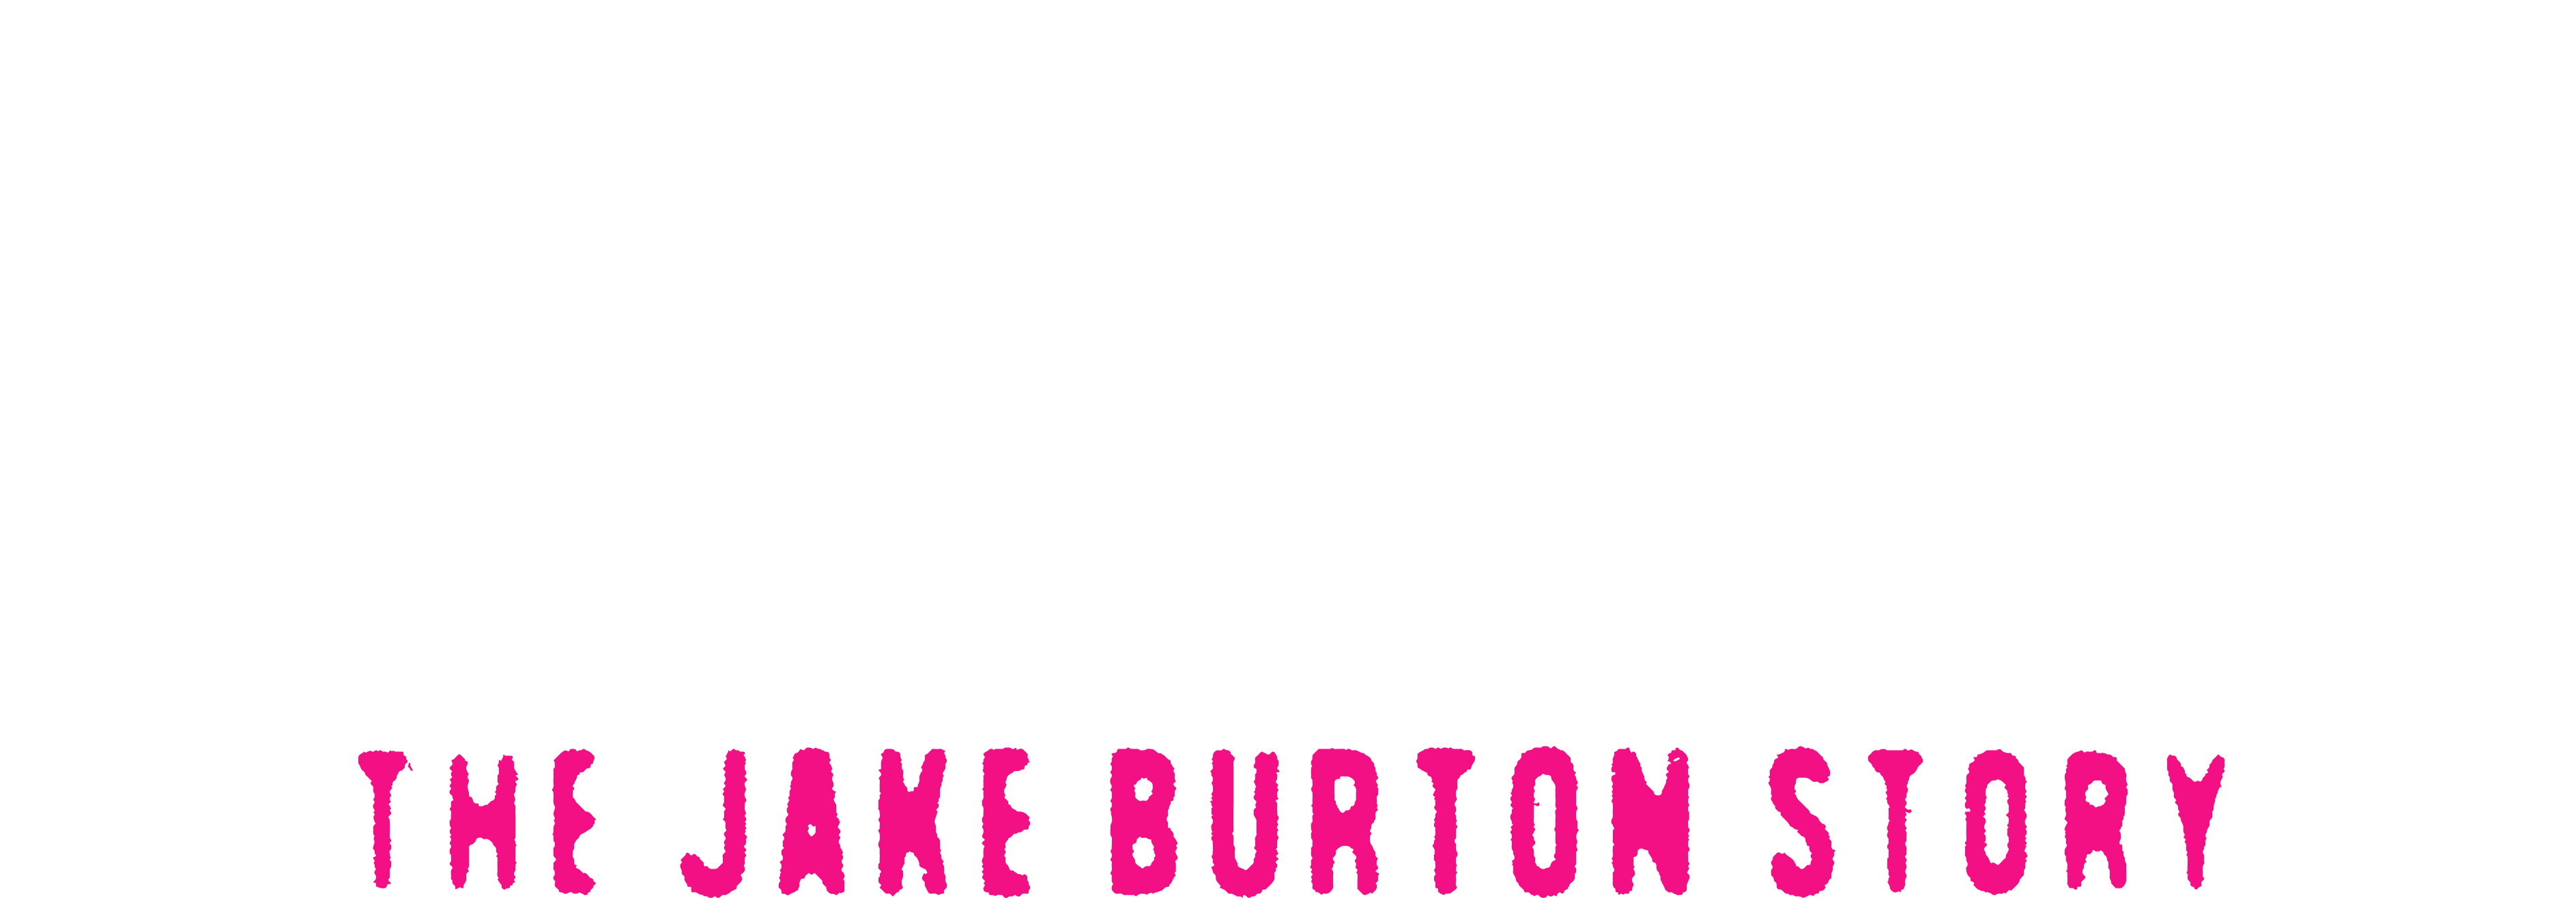 Burton.com | Burton Snowboards AU